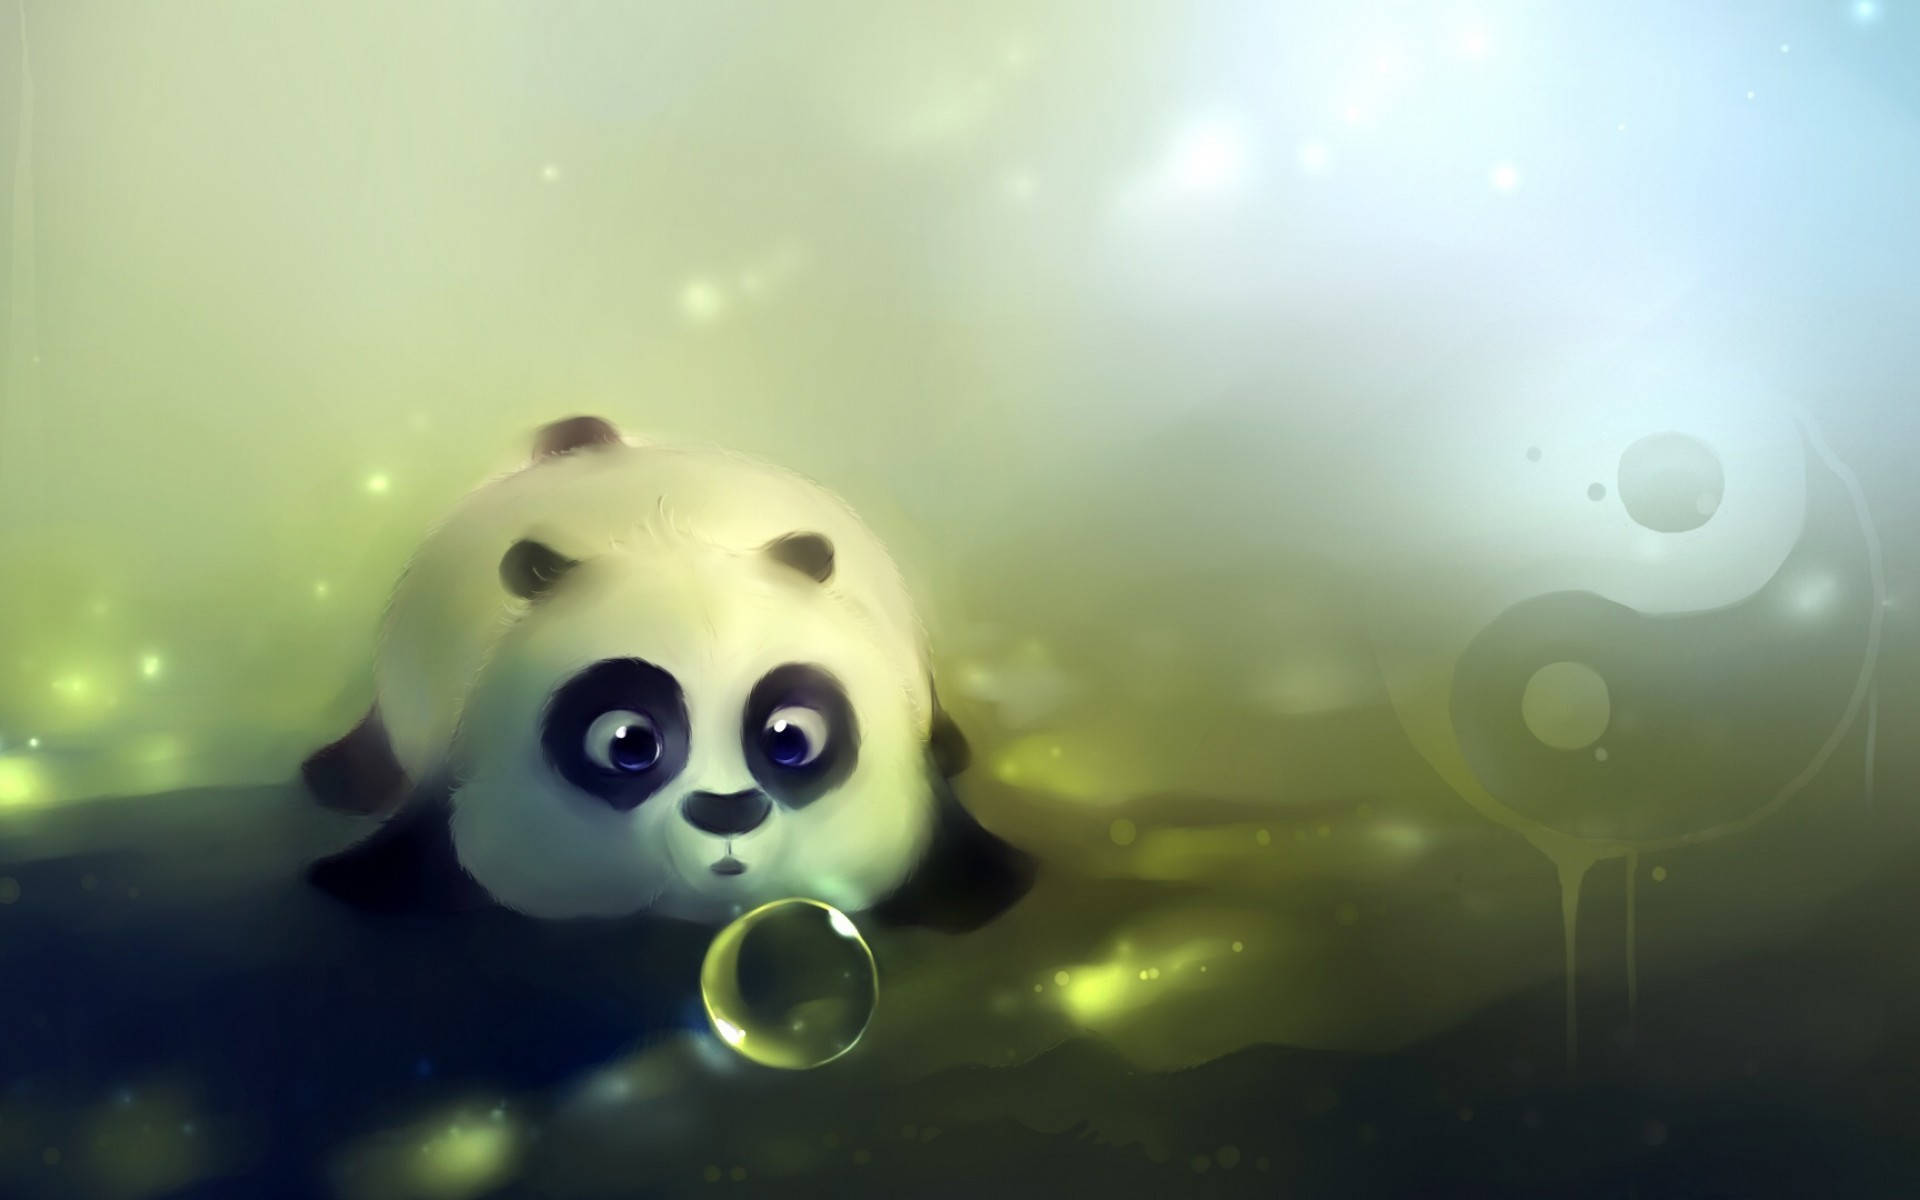 Cute Hd Image Of A Panda Background